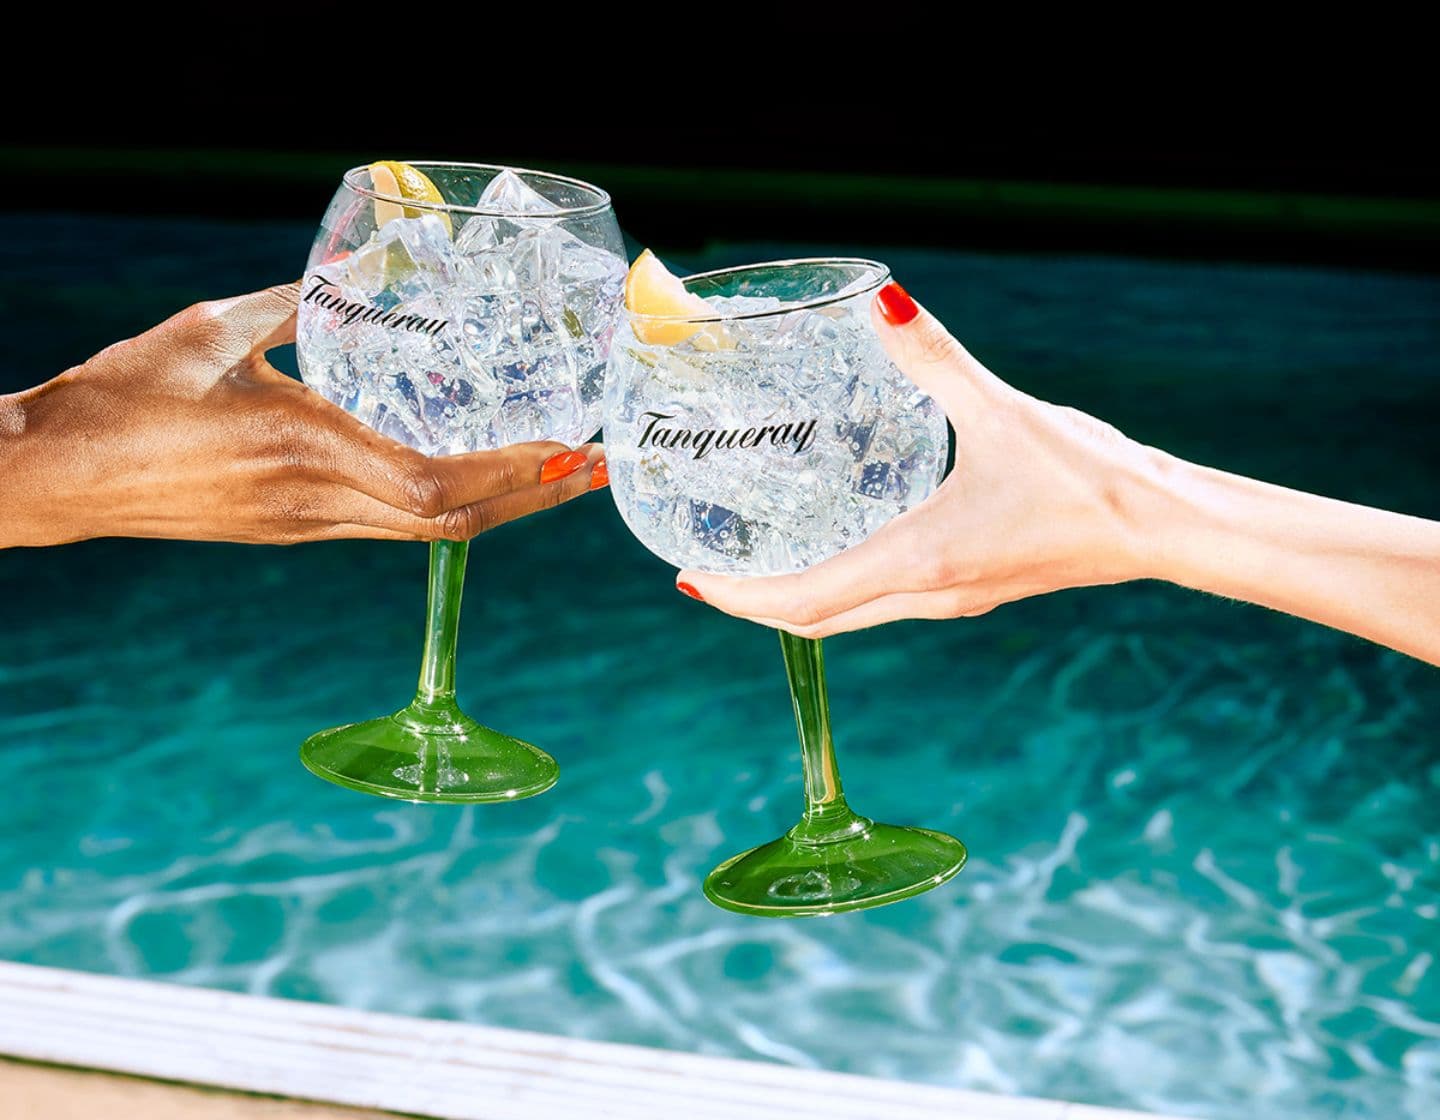 Dos personas chocan sus vasos de ginebra Tanqueray frente a una piscina. 